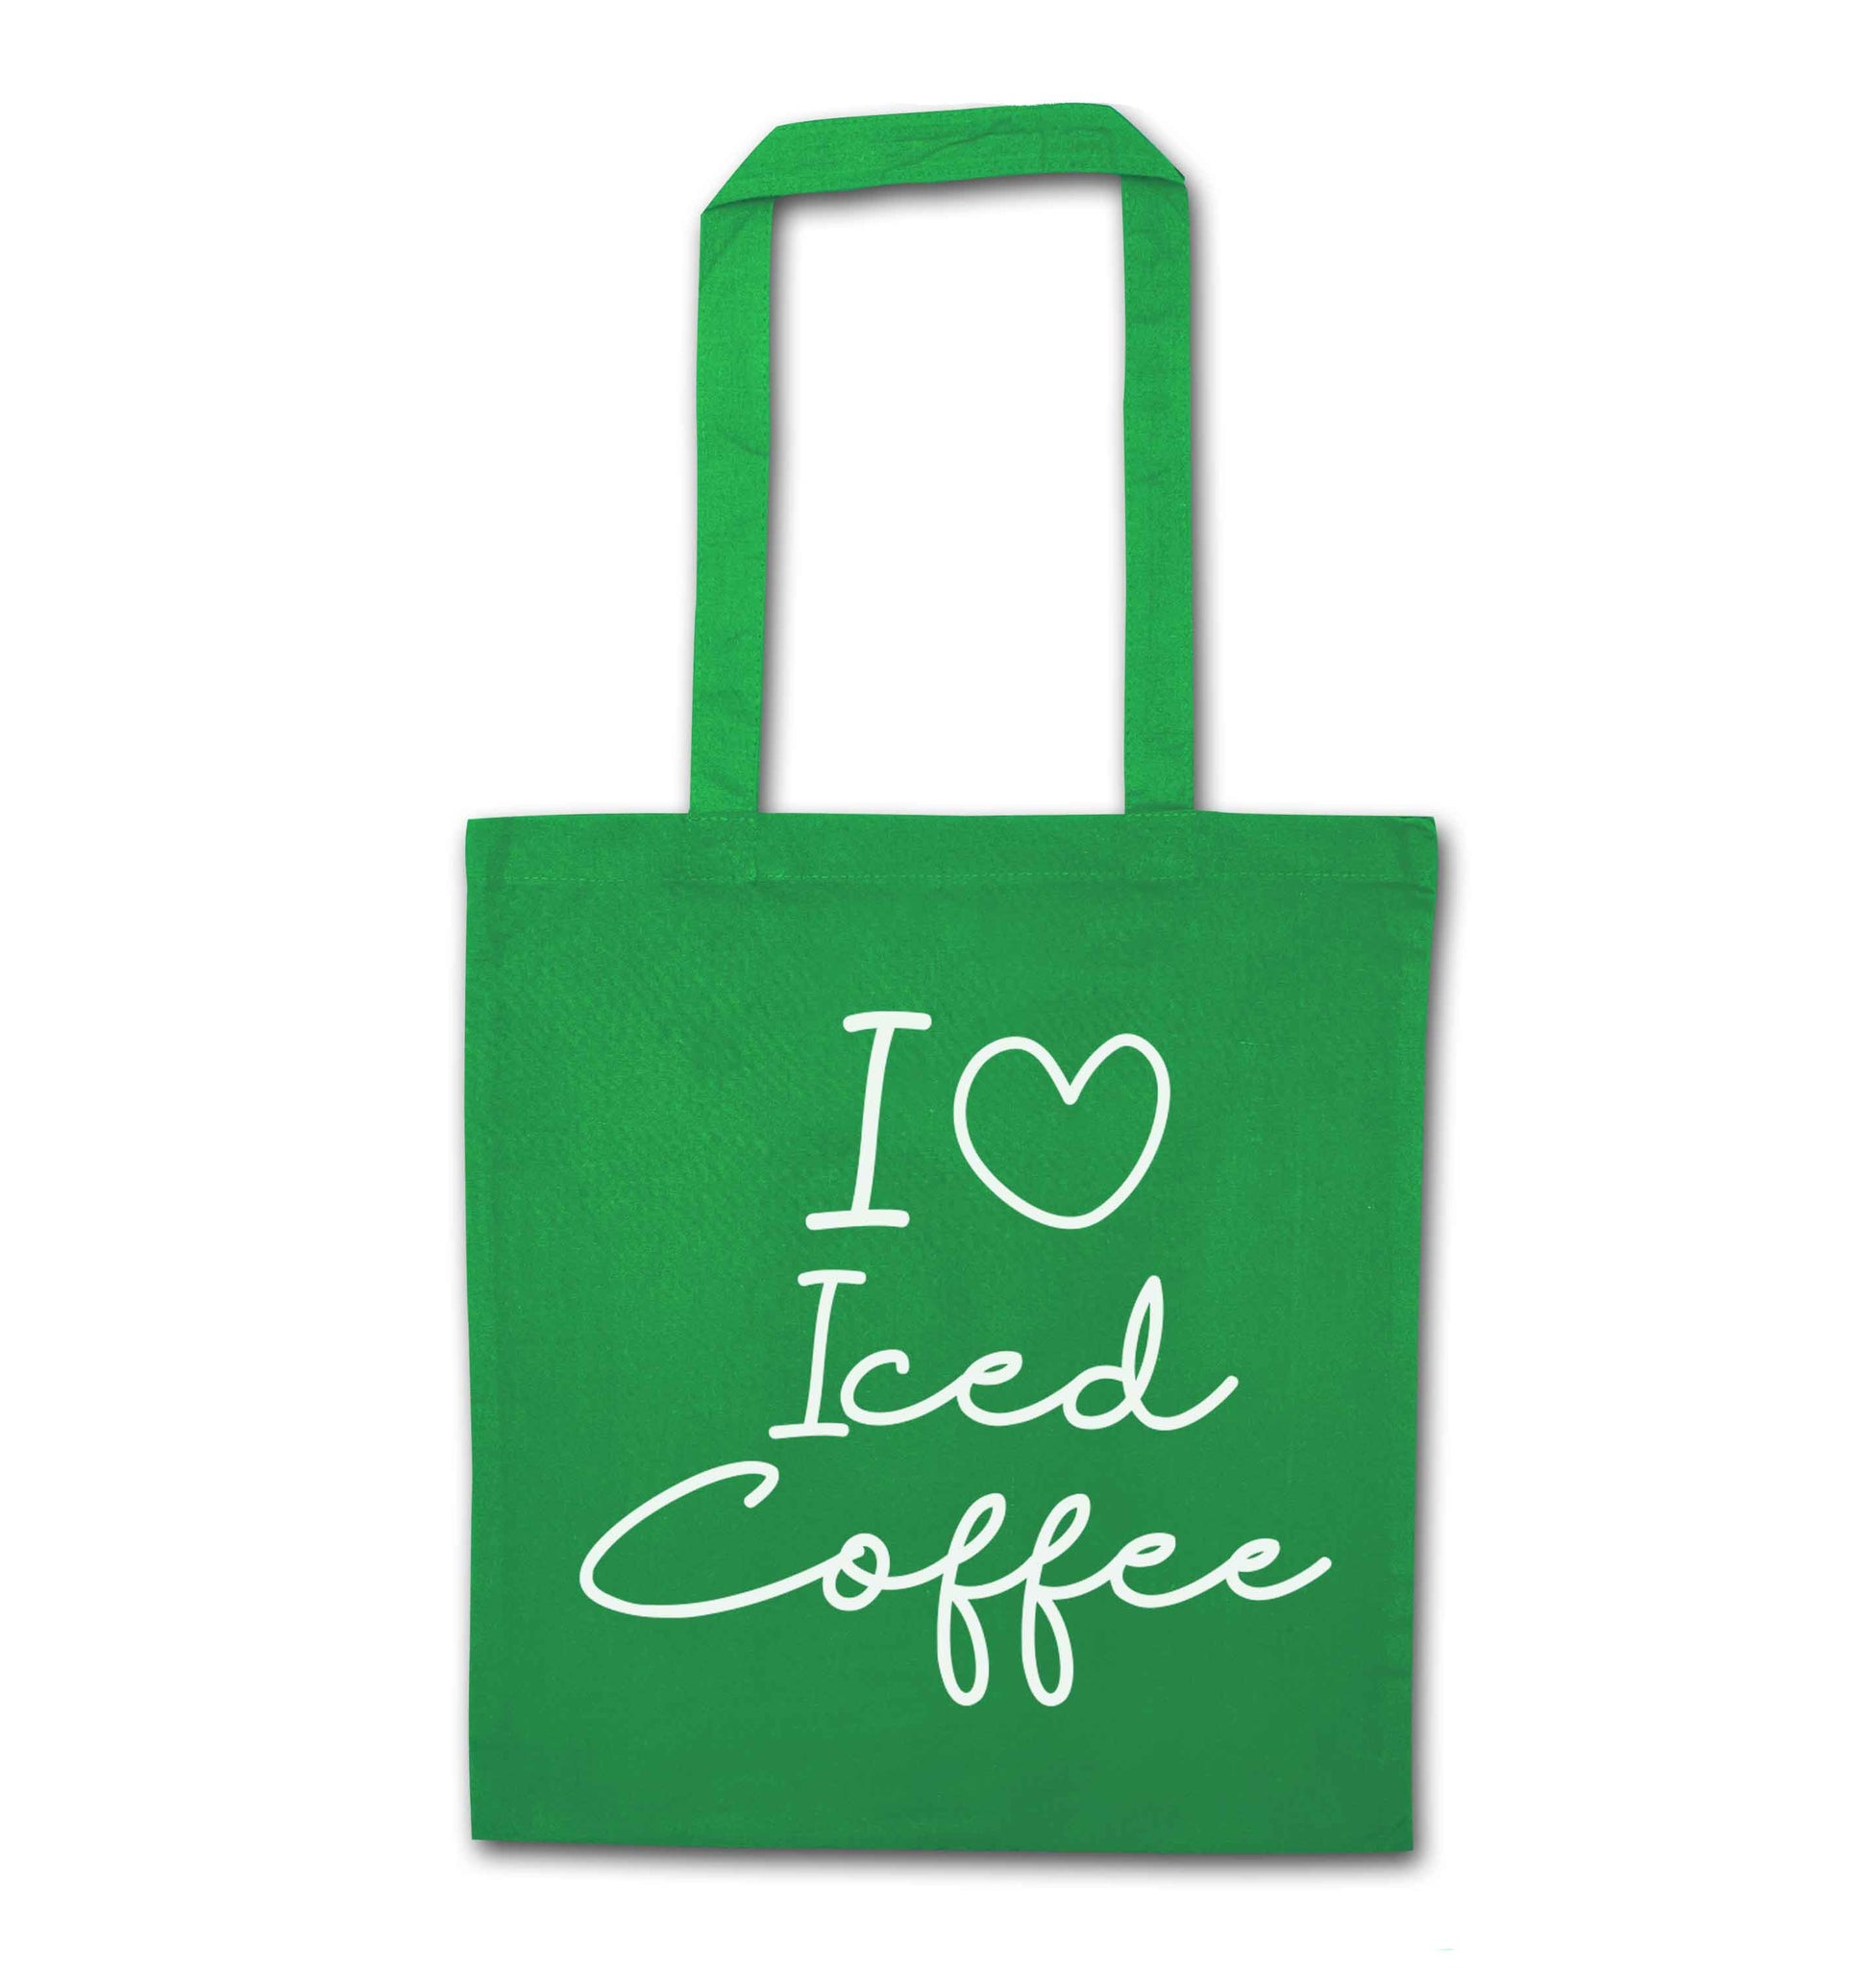 I love iced coffee green tote bag